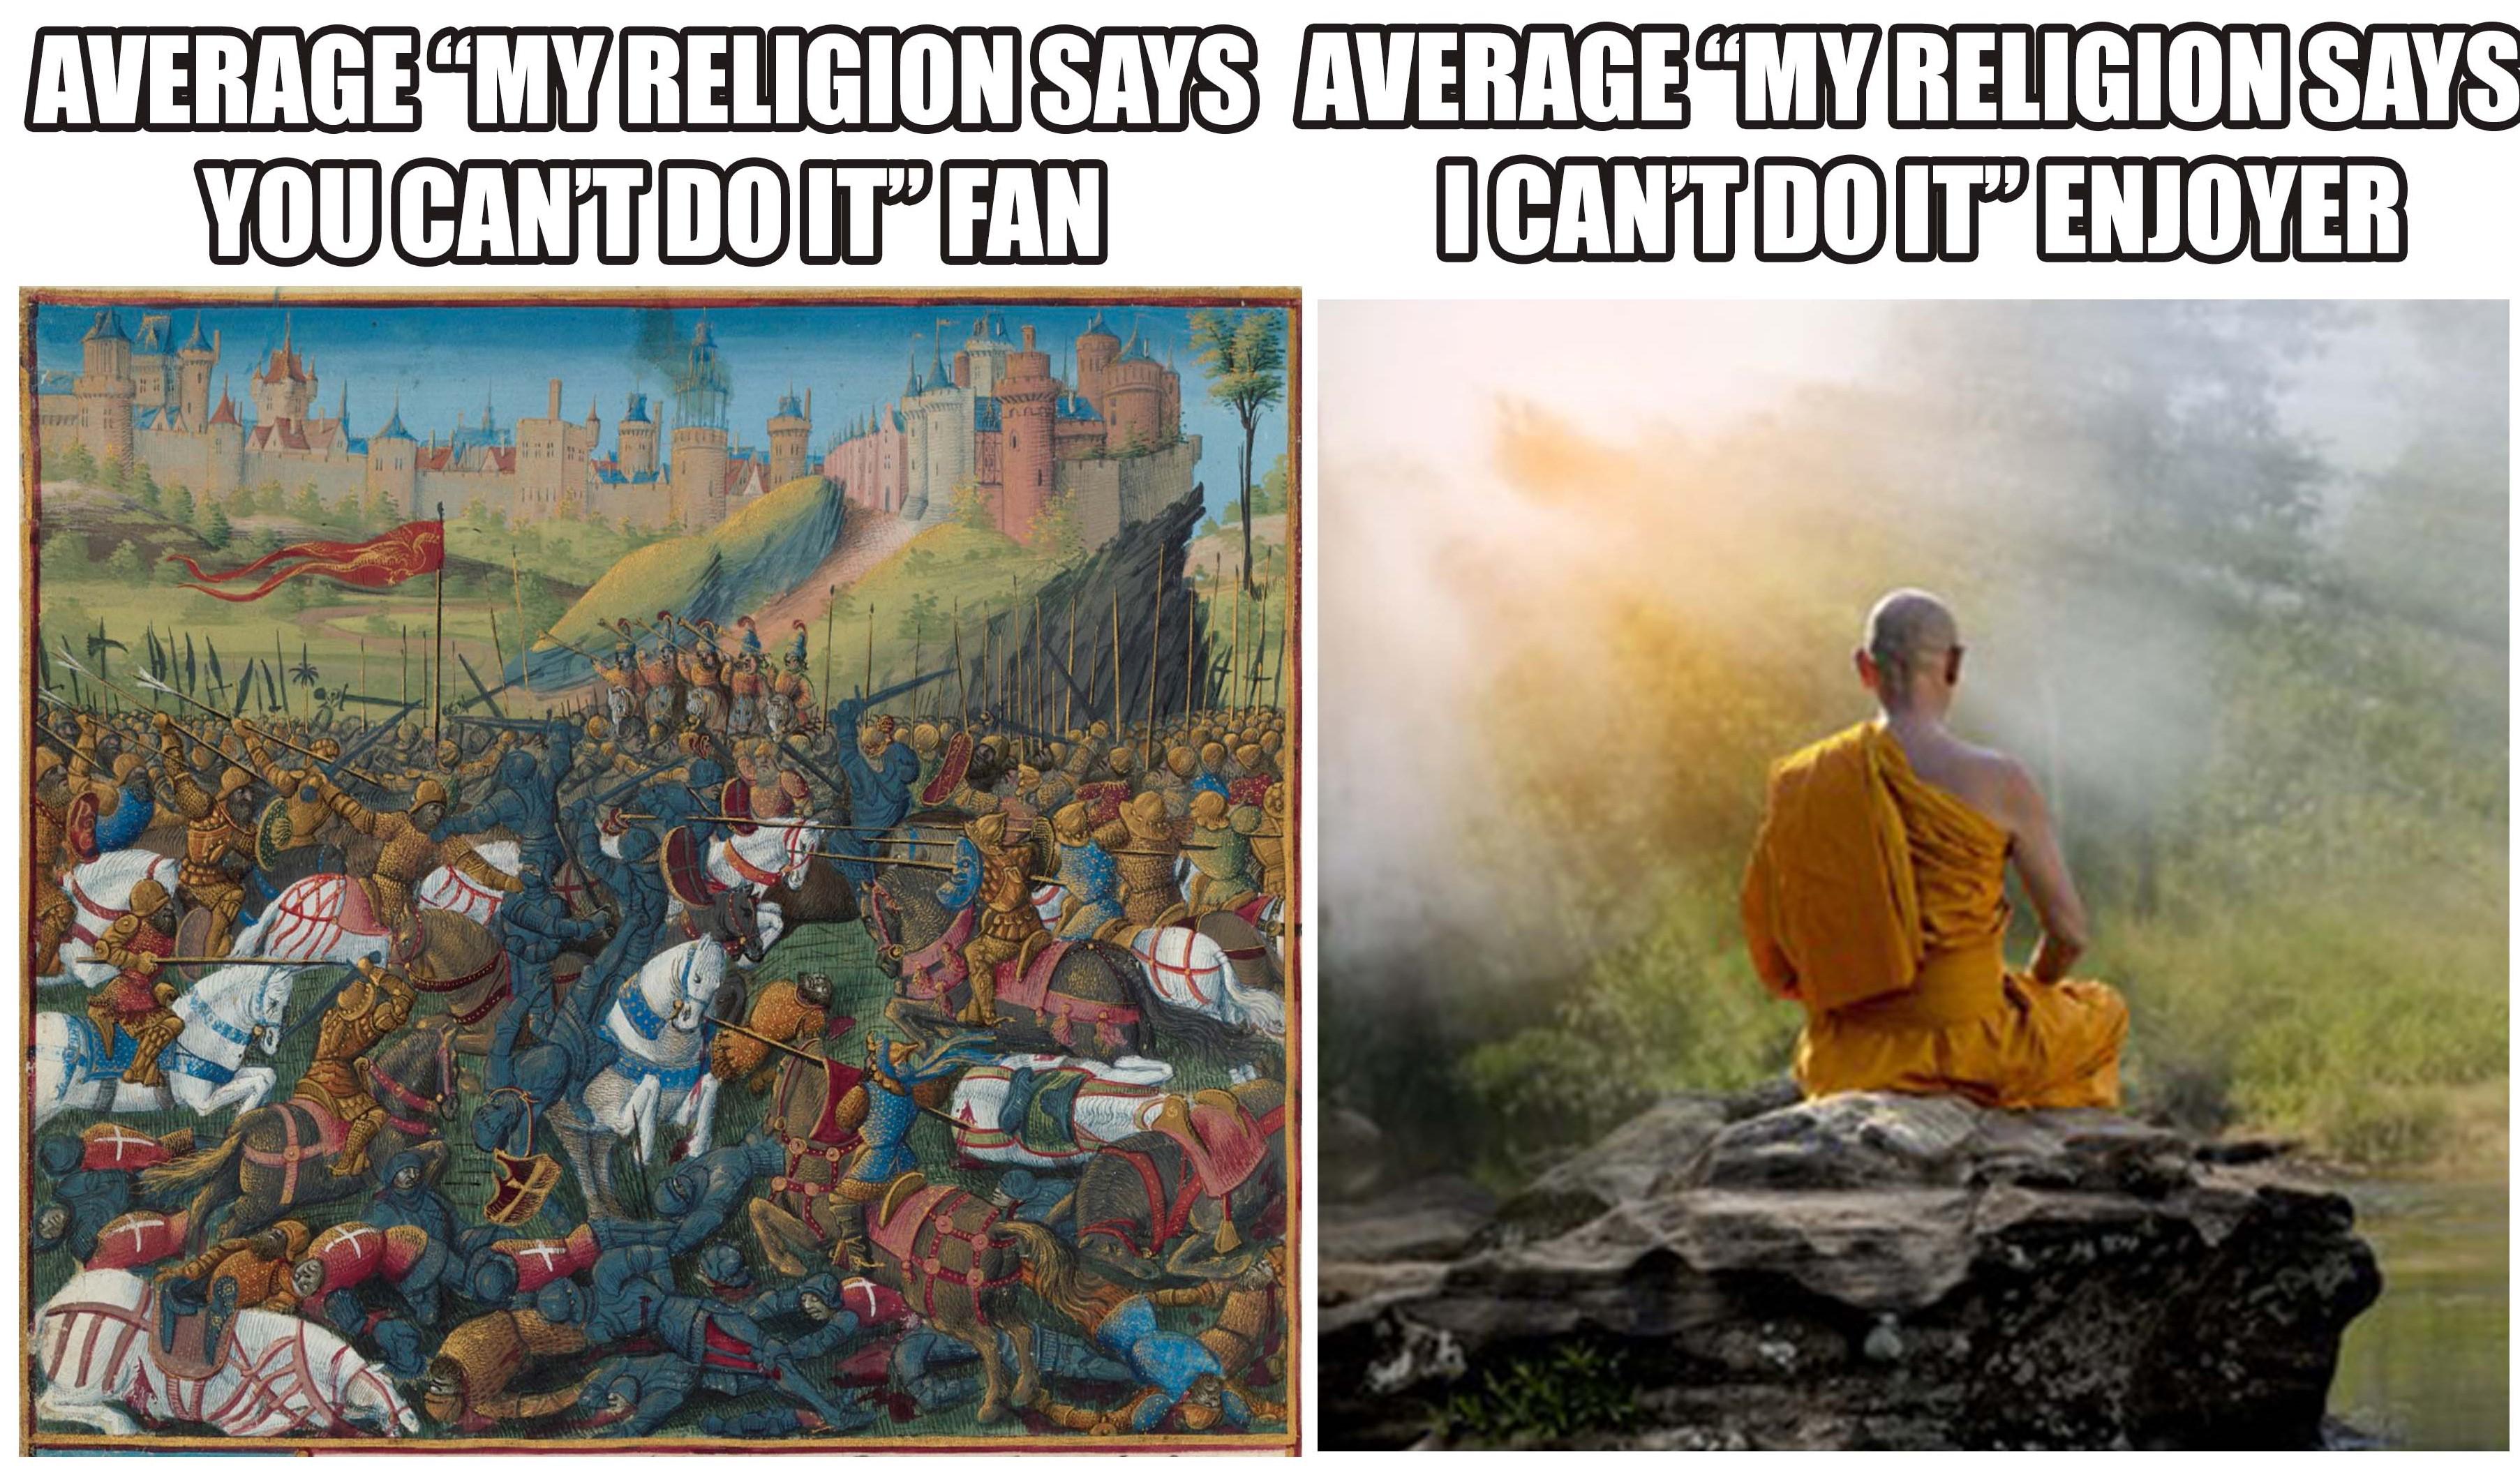 seljuk turks - Average My Religion Says Average My Religion Says You Cant Doit Fan Icant Doit Enjoyer Via